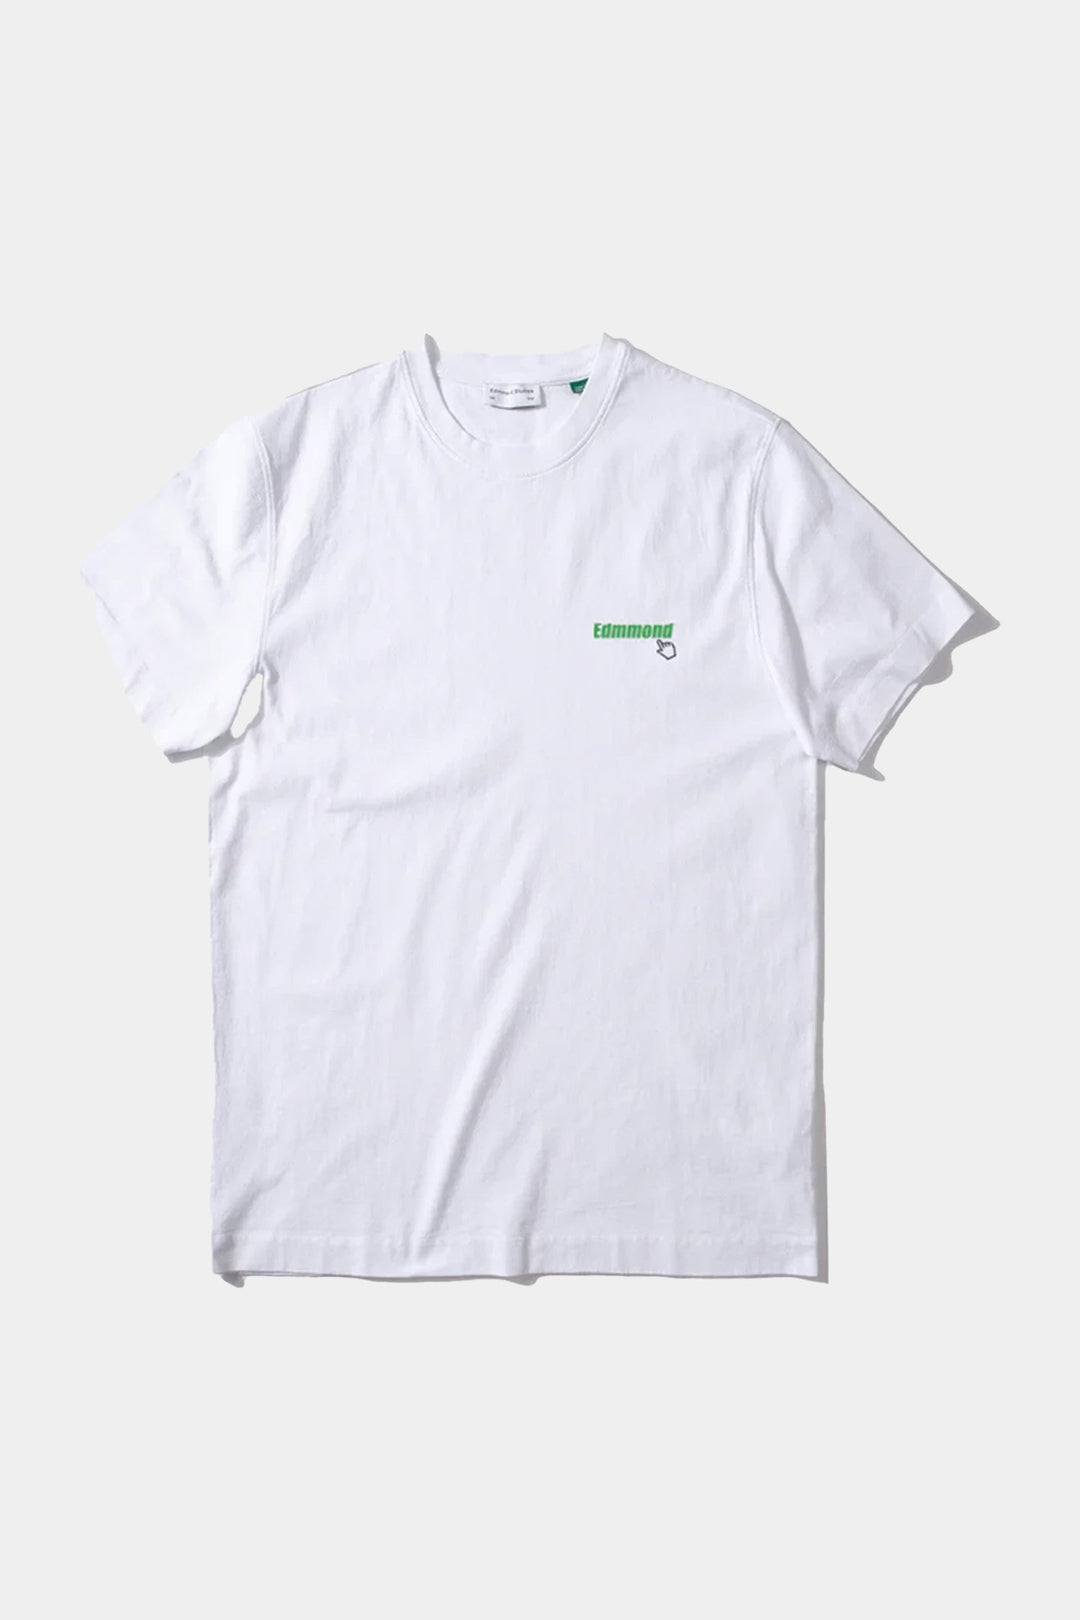 Edmond-studios-t-shirt-bianca-5 (1)